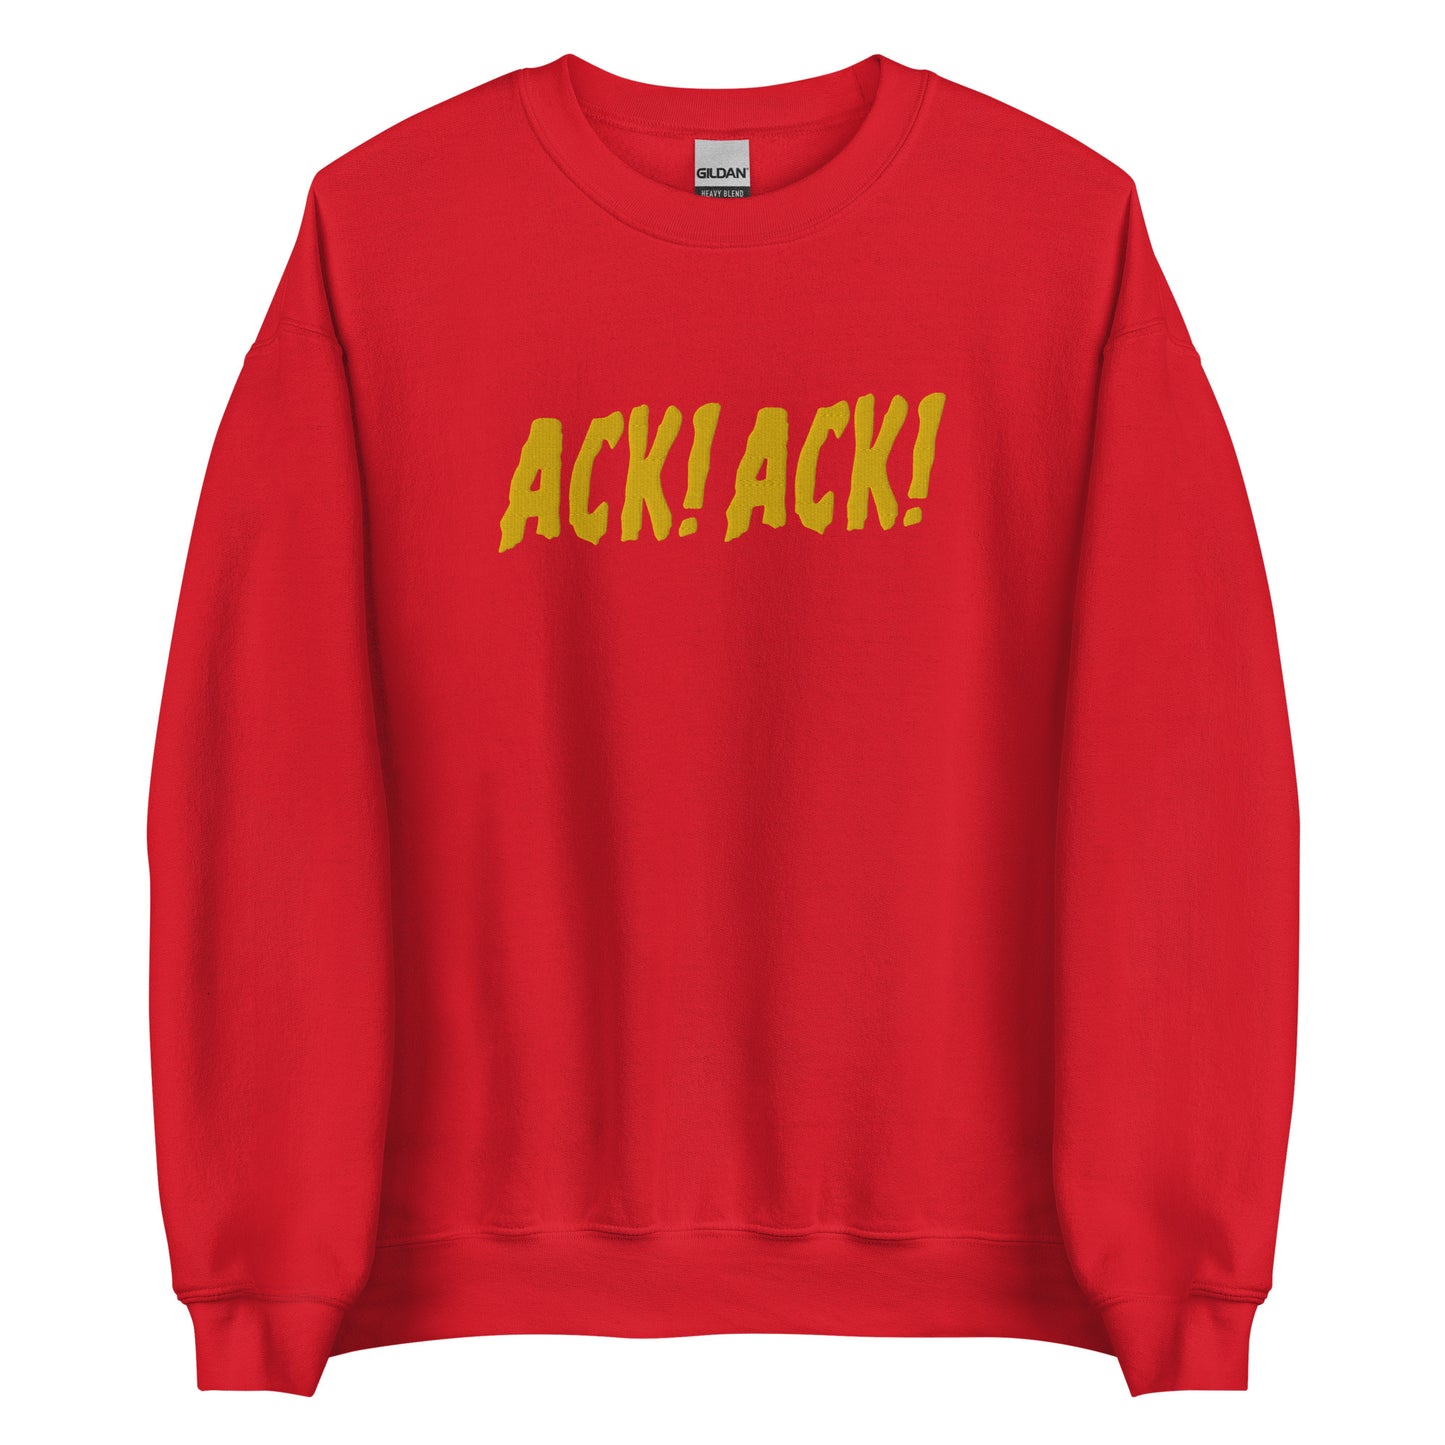 ACK! ACK! embroidered crewneck sweatshirt